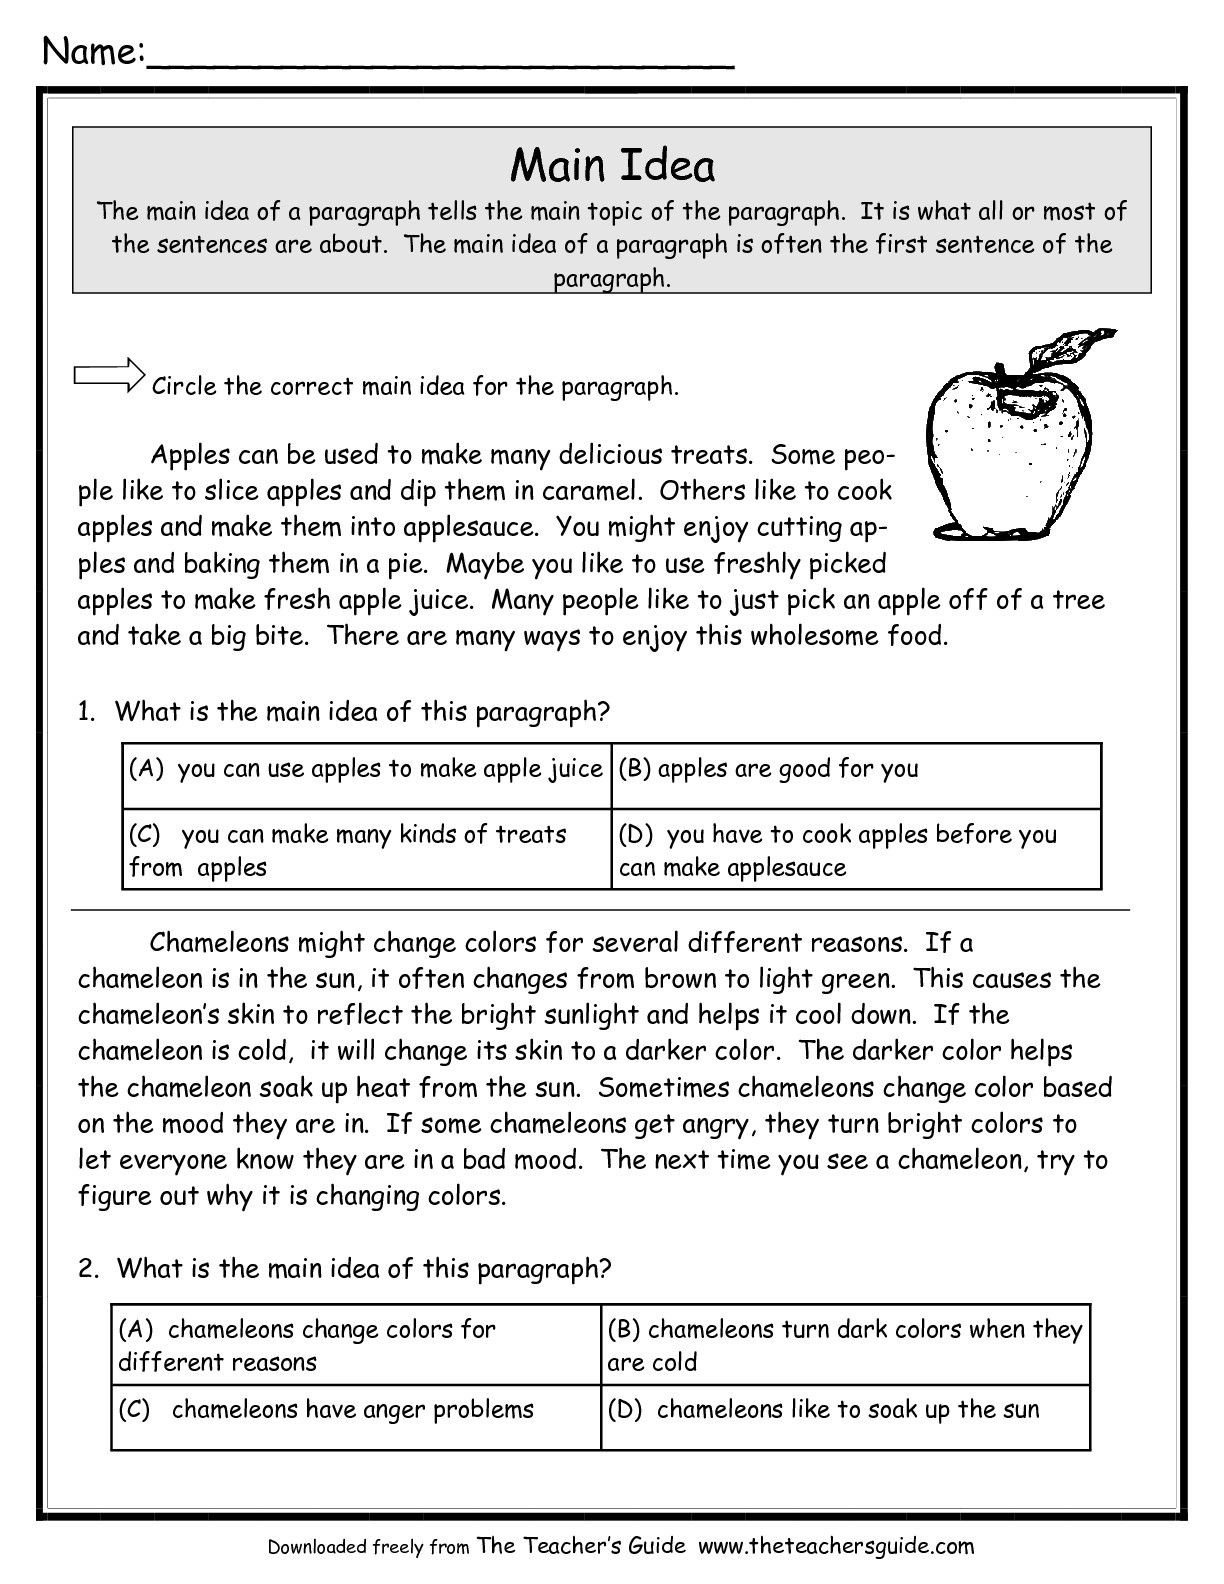 8th Grade Main Idea Worksheets Main Idea Worksheets From the Teacher S